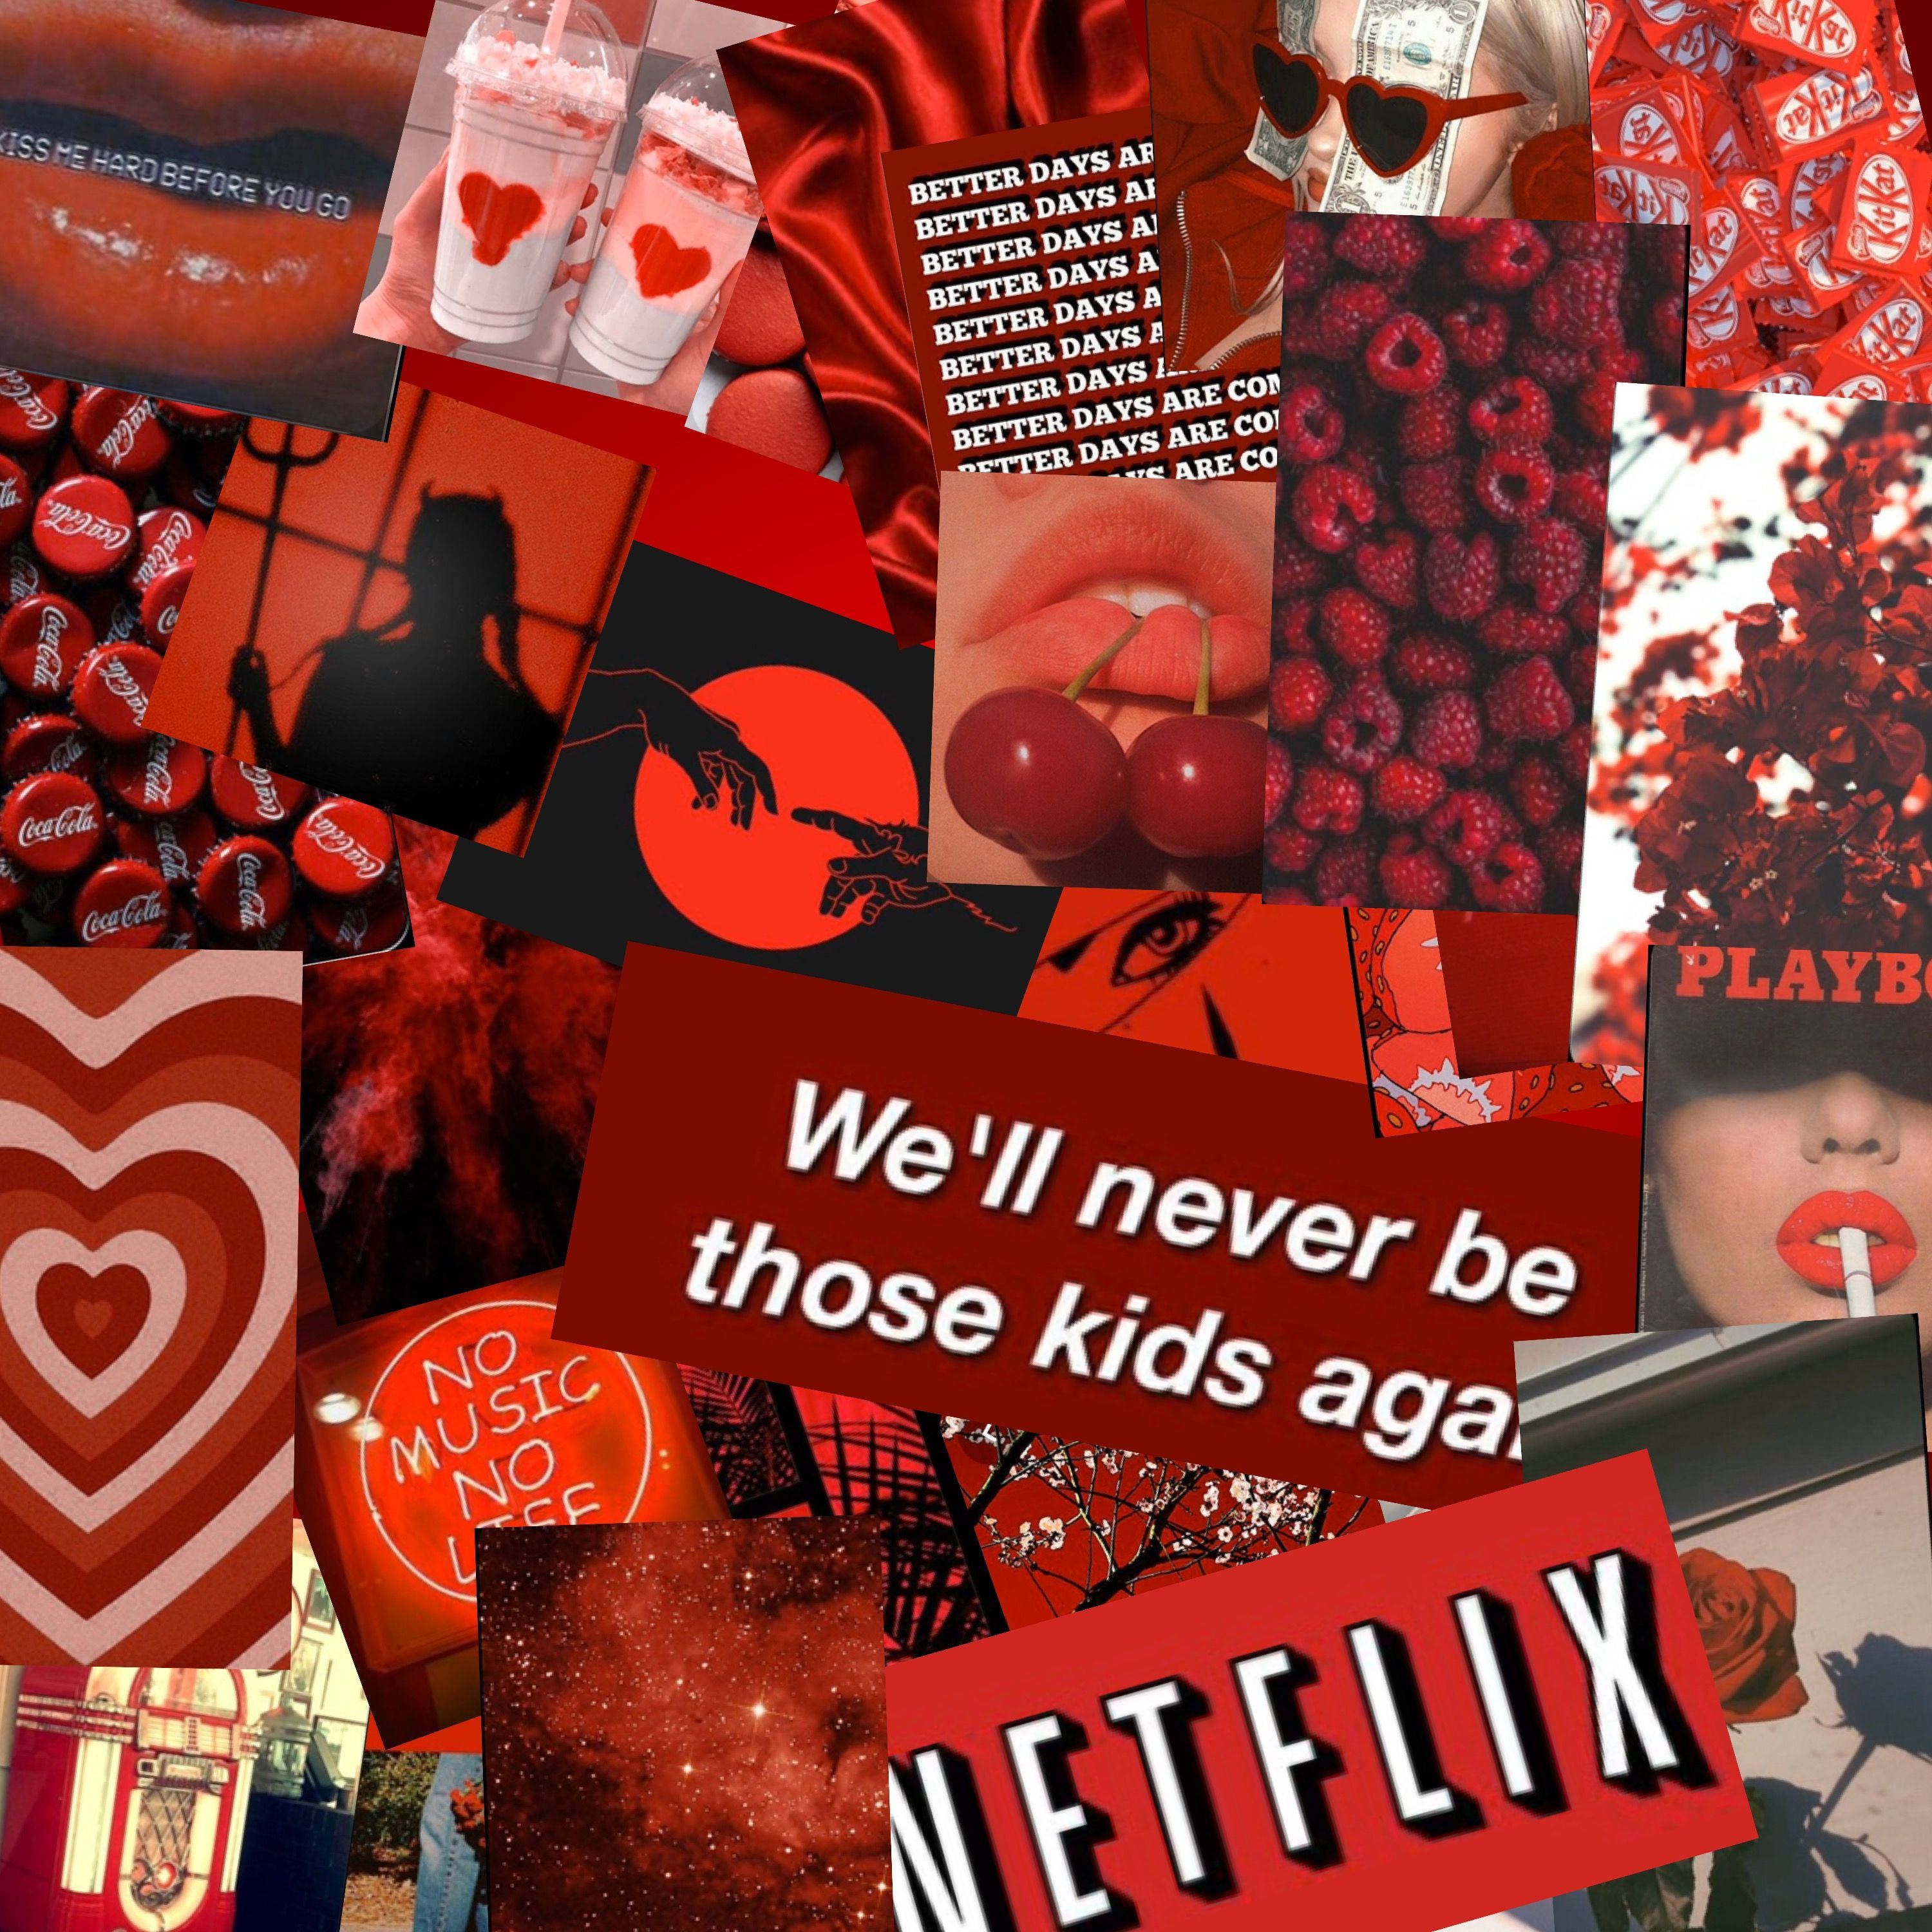 Download Netflix Pastel Red Aesthetic Wallpaper